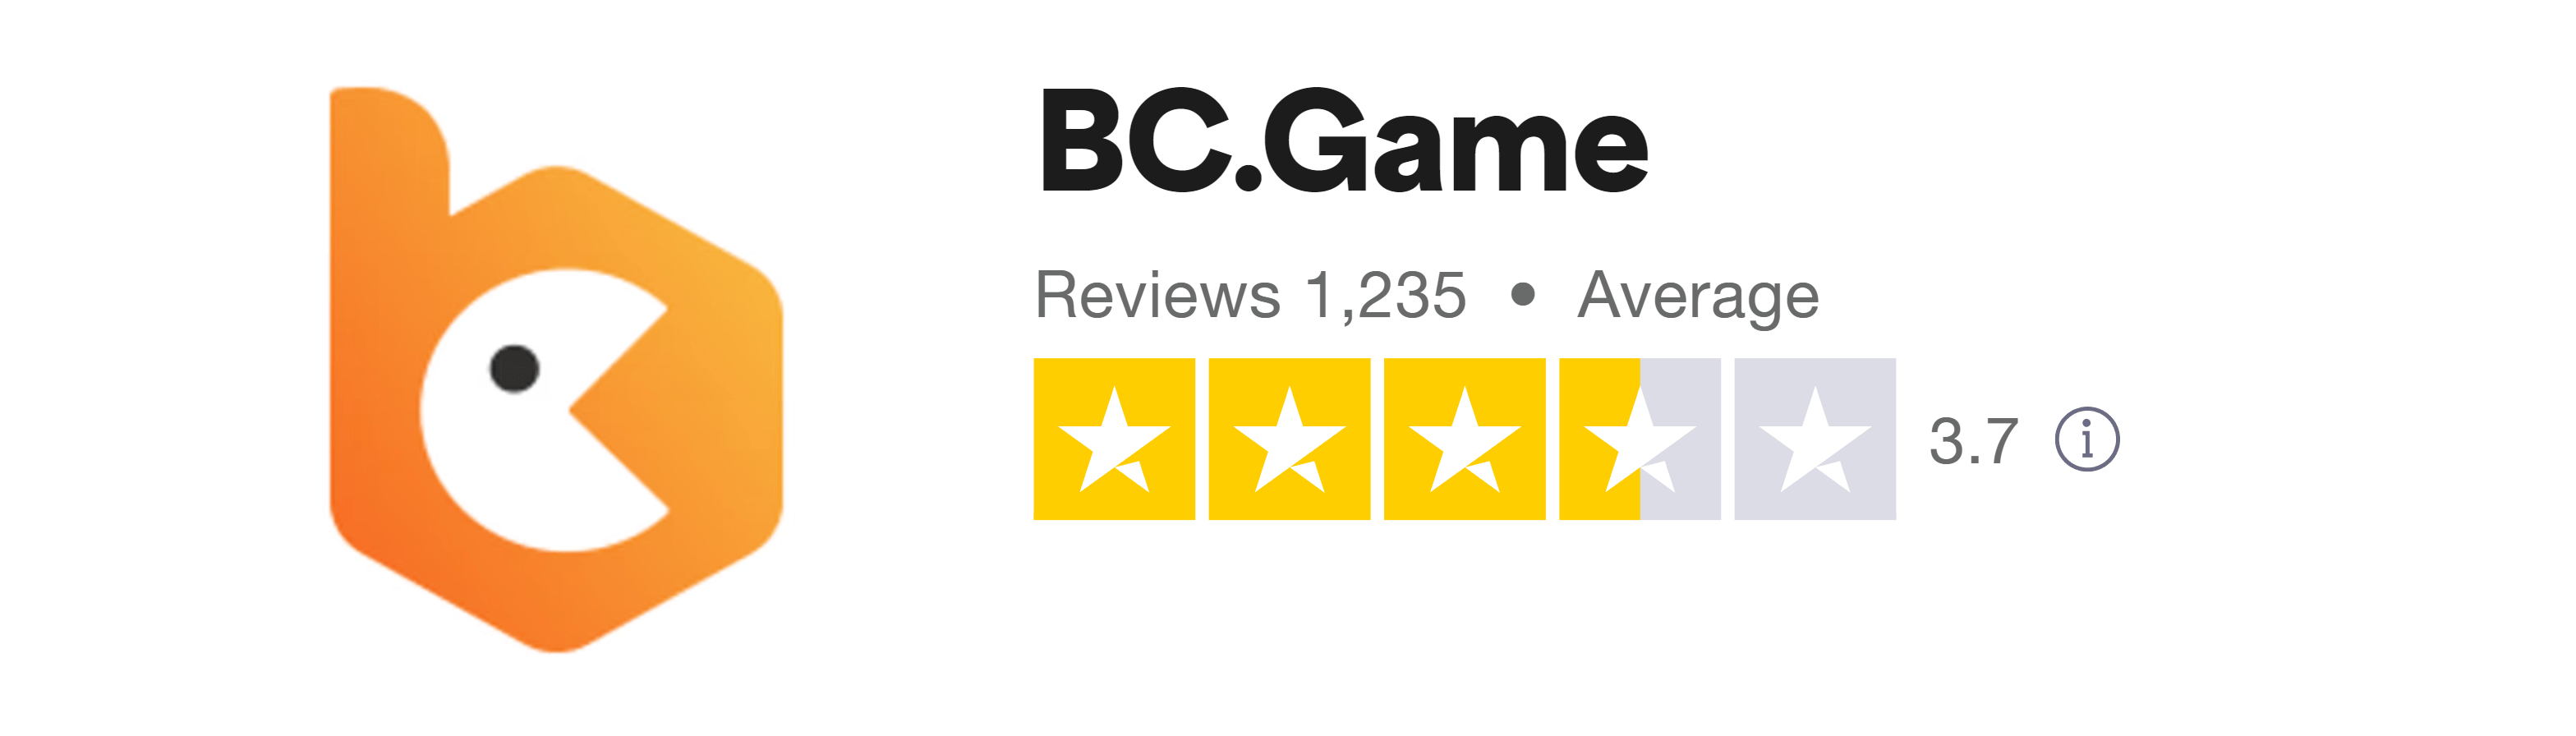 Trustpilot rating screenshot for the BC Game